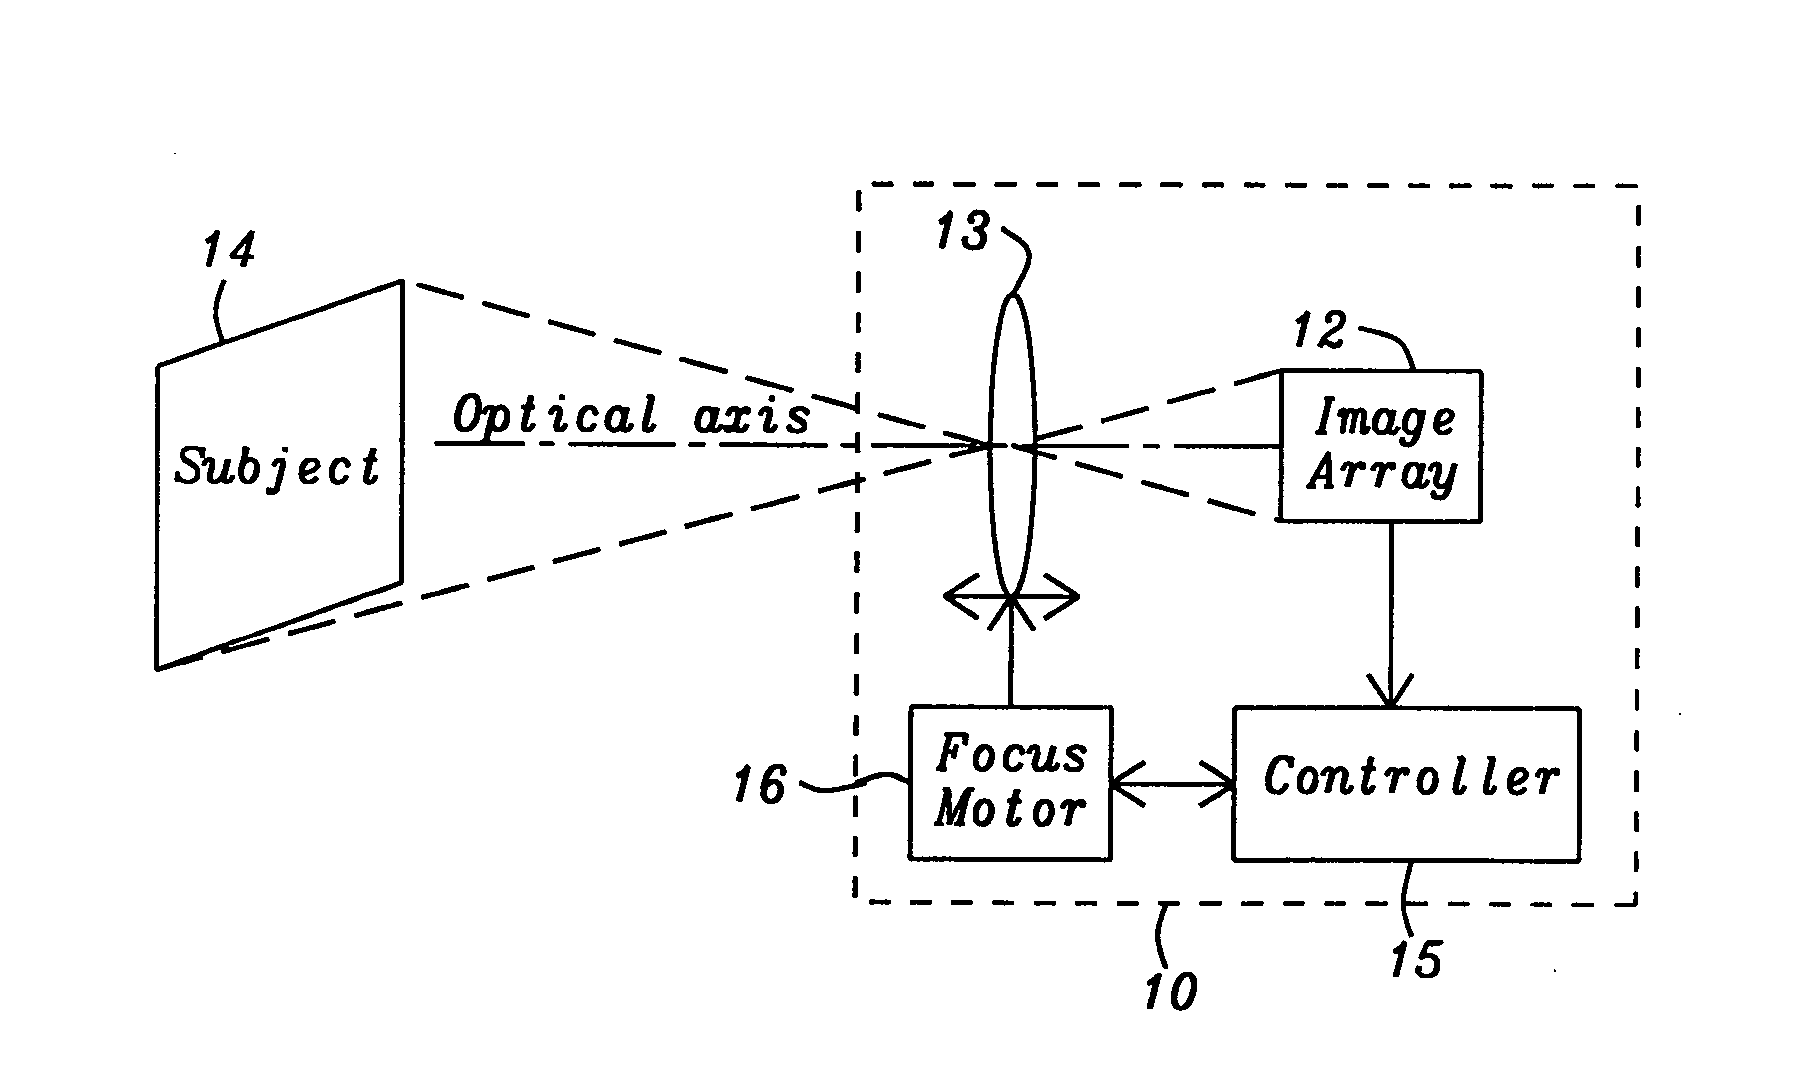 Method to determine auto focus of a digital camera